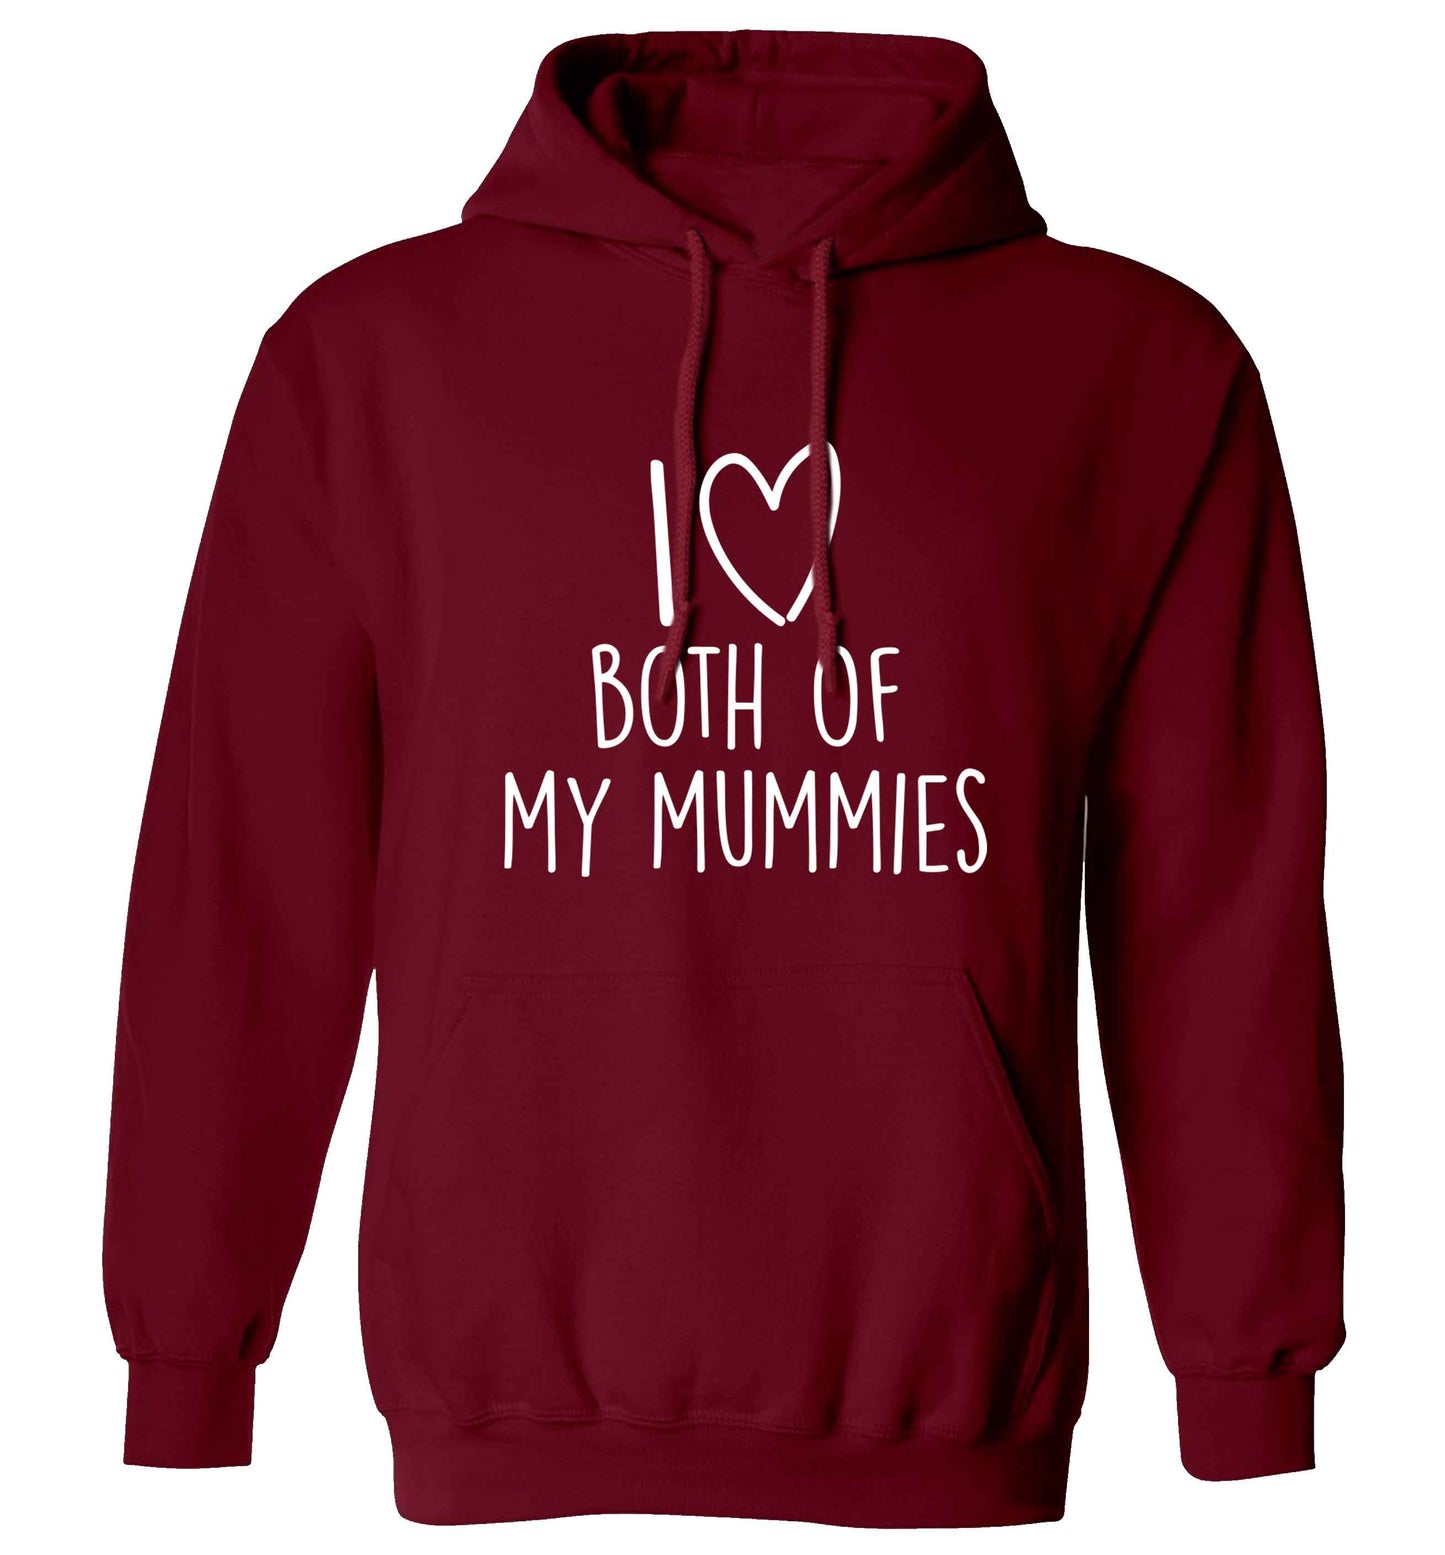 I love both of my mummies adults unisex maroon hoodie 2XL